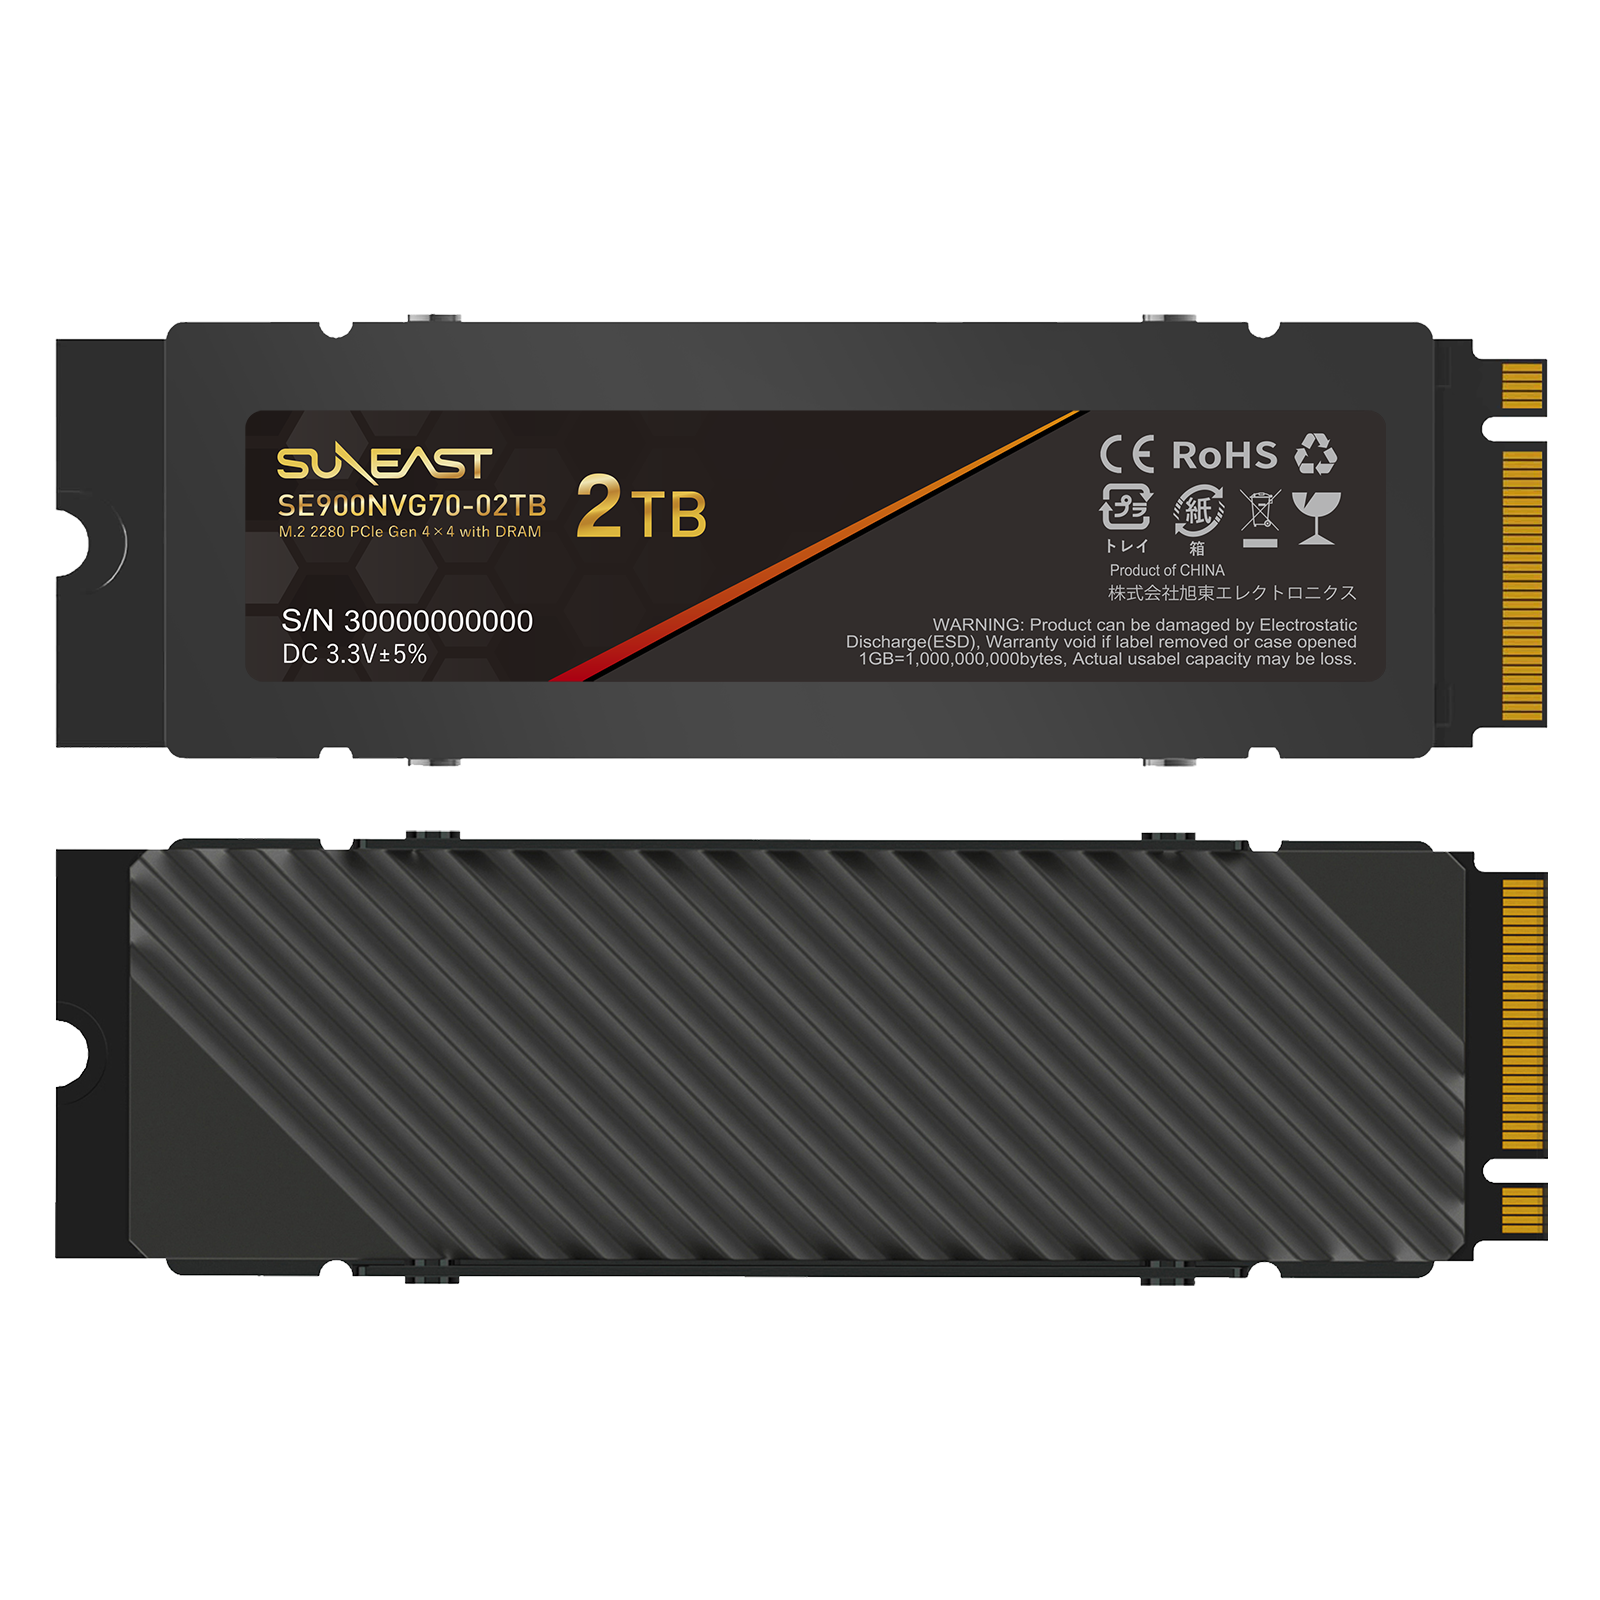 M.2 2280 NVMe SSD Gen 4×4 with DRAM【SE900/70シリーズ】2TB - SUNEAST online store